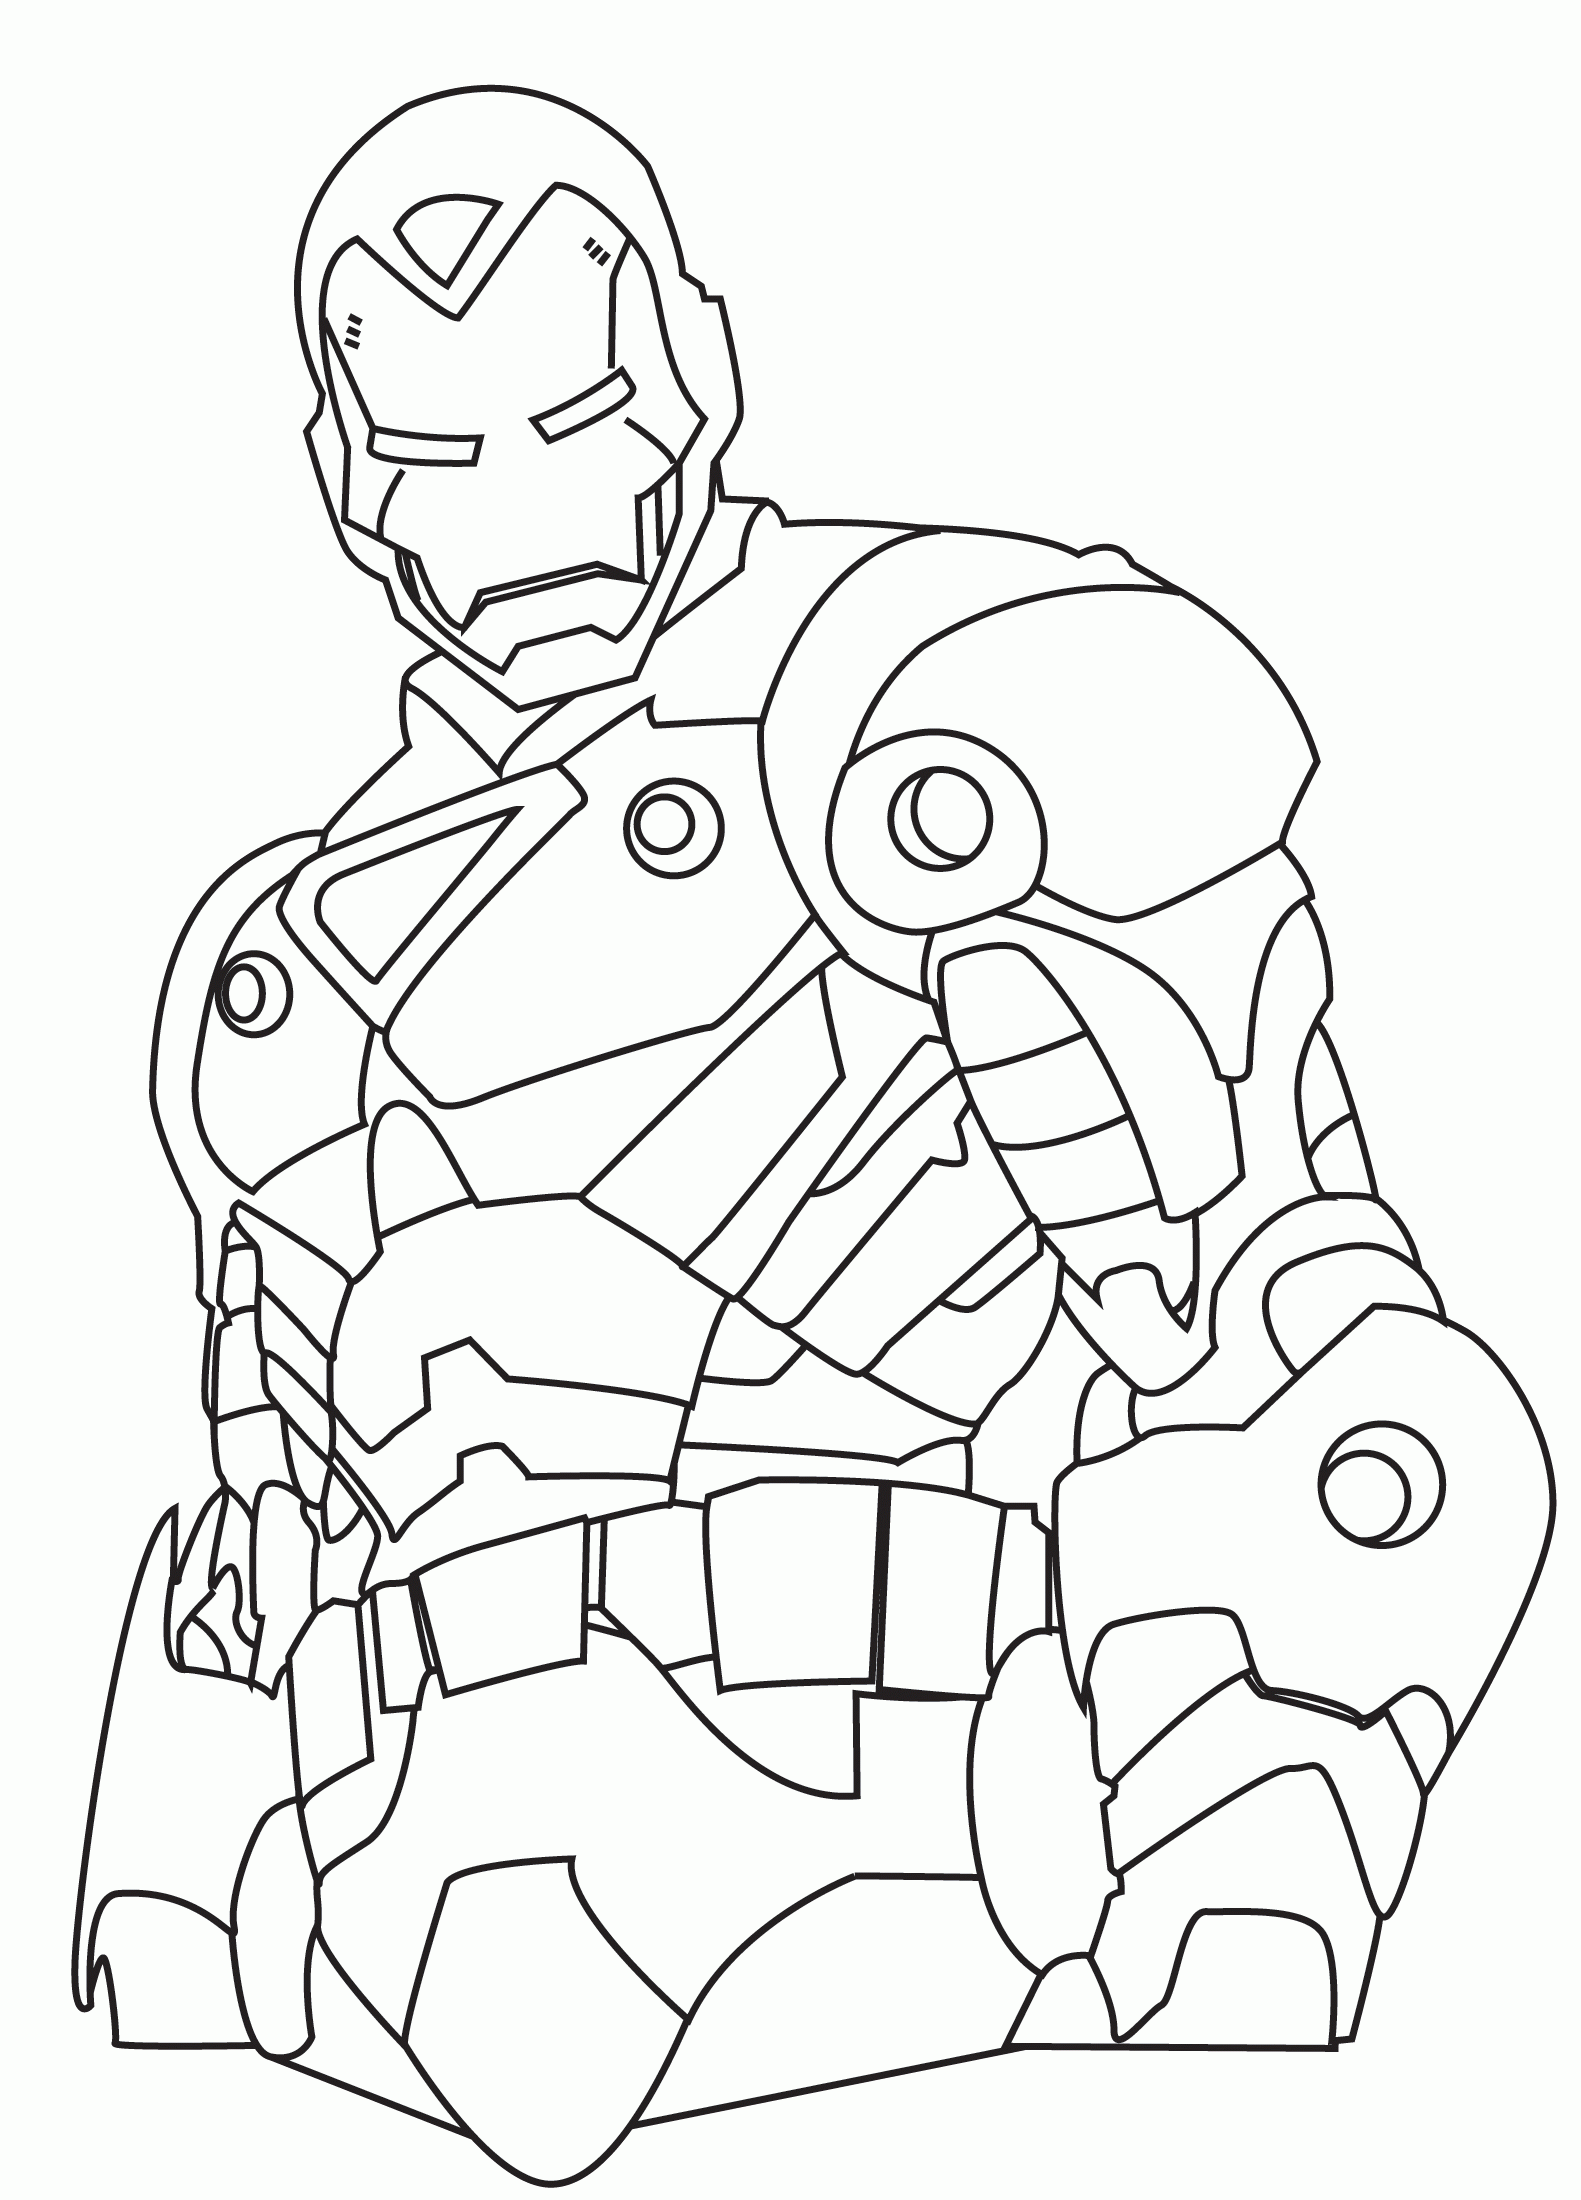 iron man sketch in color